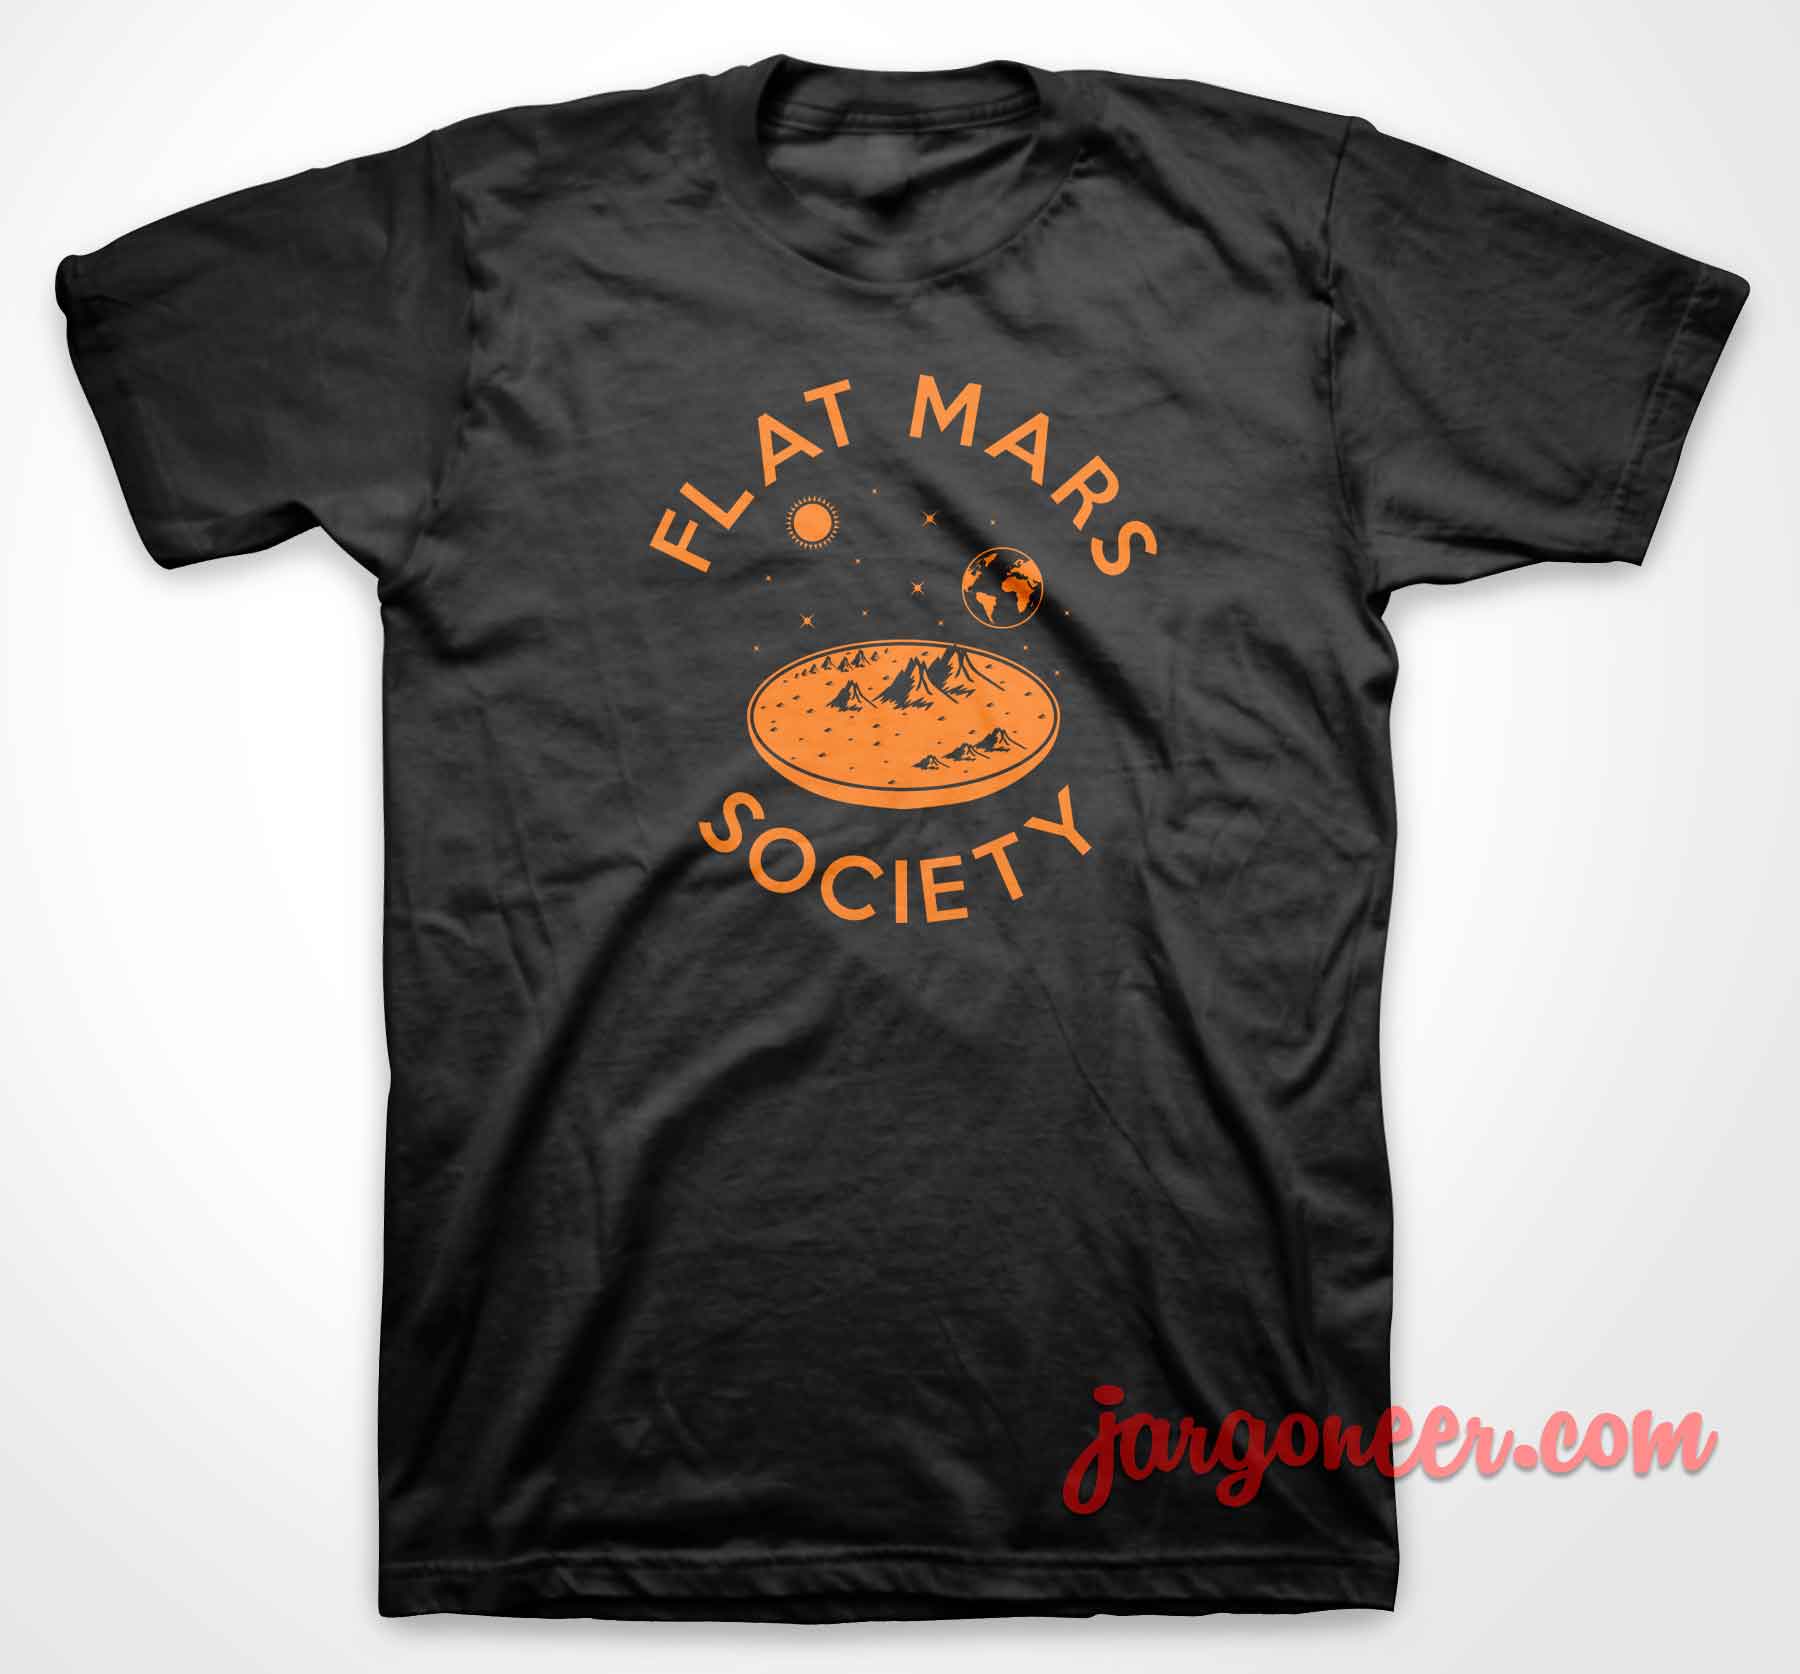 Flat Mars Society - Shop Unique Graphic Cool Shirt Designs